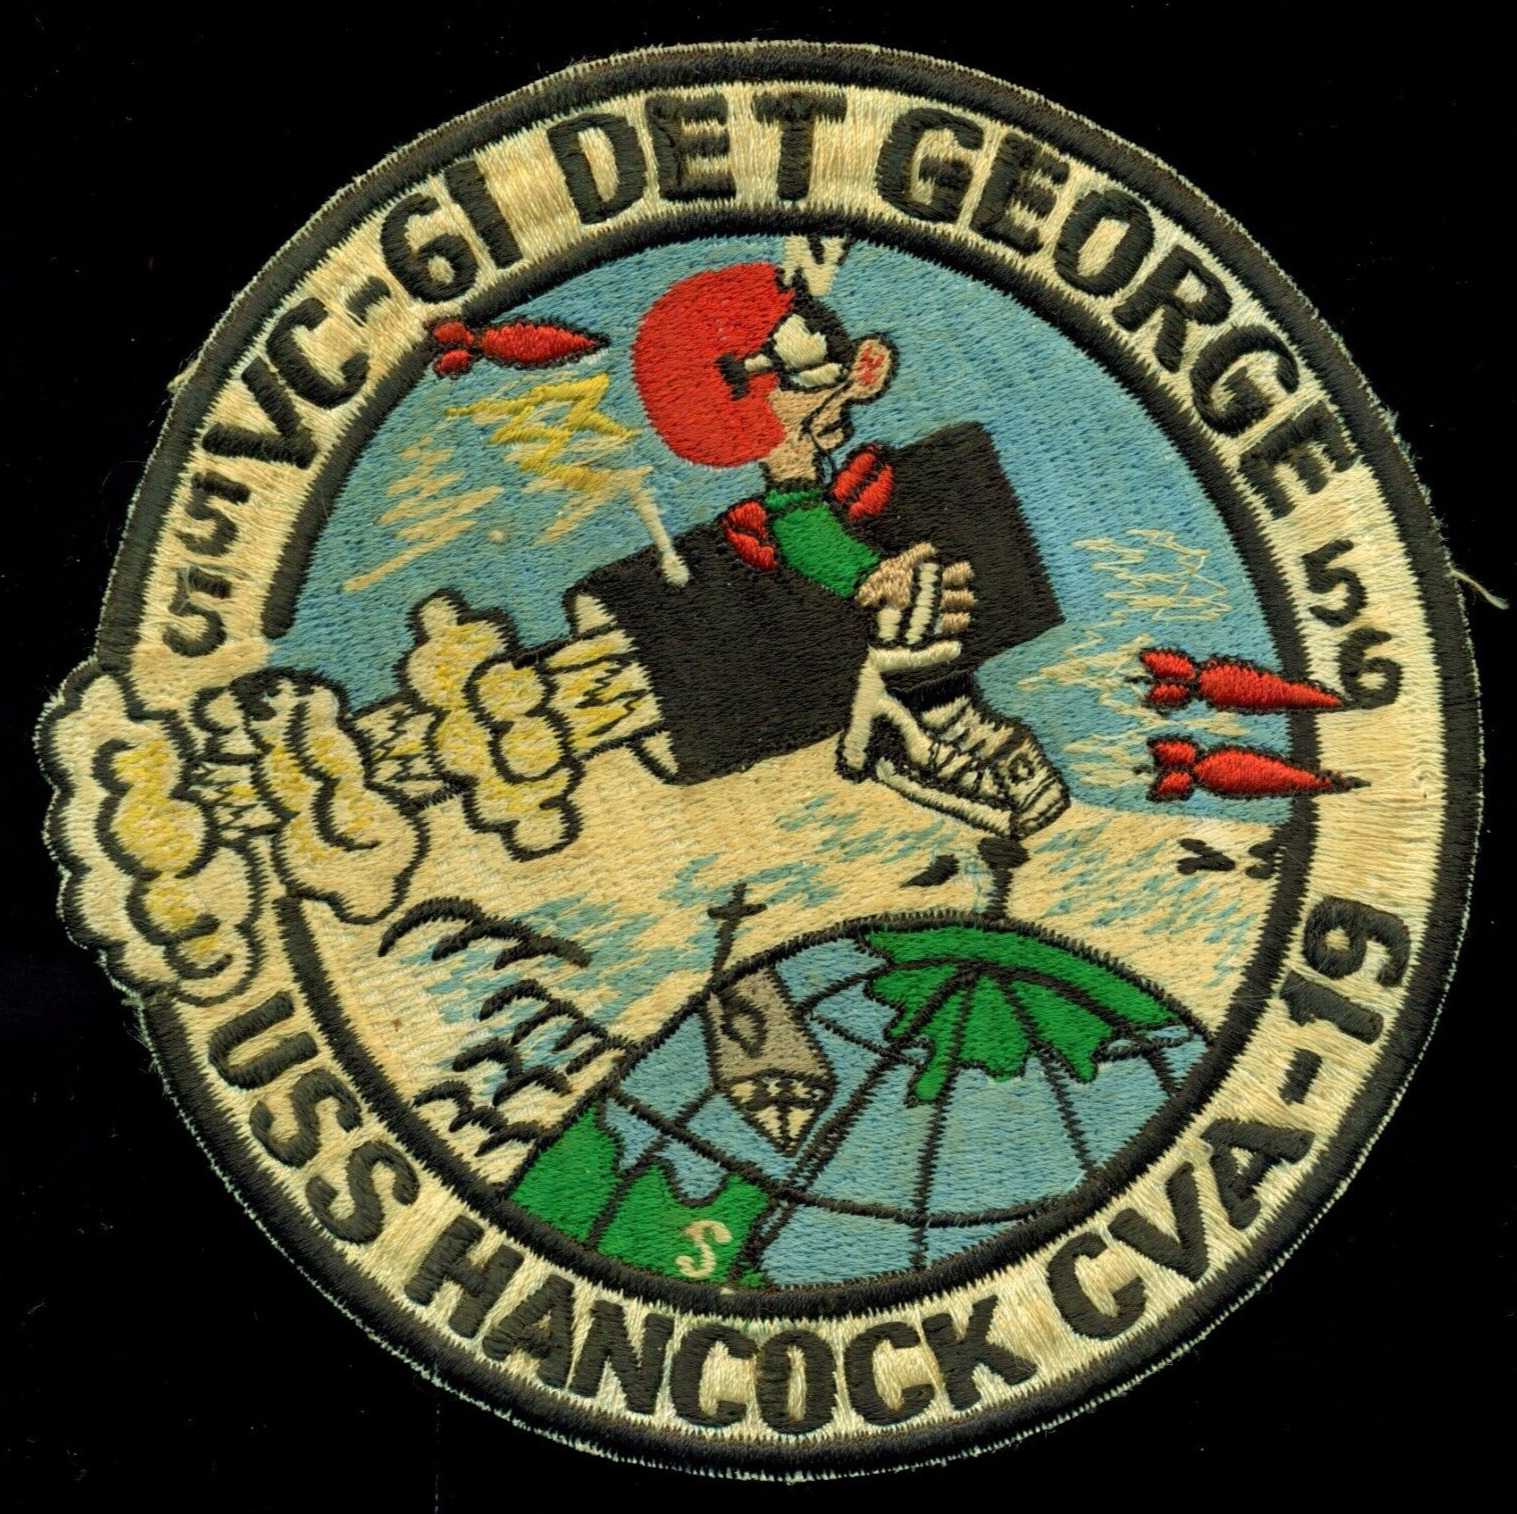 USN VC-61 Det George USS Hancock 1955 1956 Patch S-8